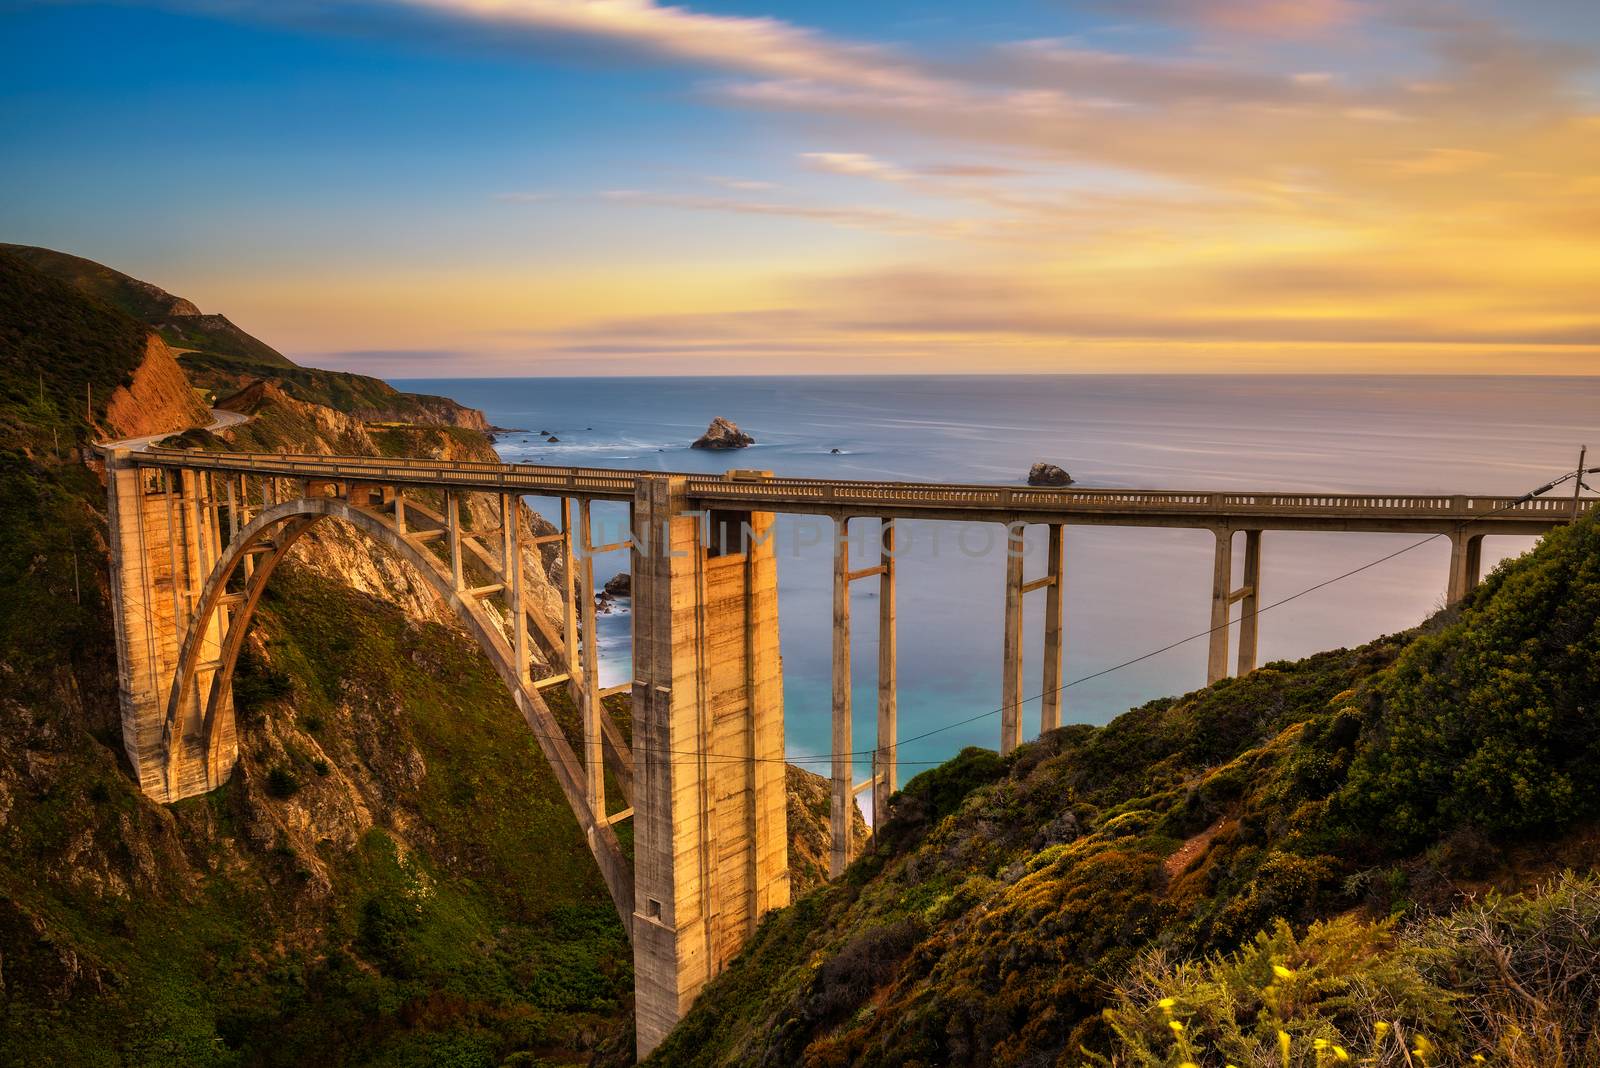 Bixby Bridge and Pacific Coast Highway at sunset near Big Sur in California, USA. Long exposure.